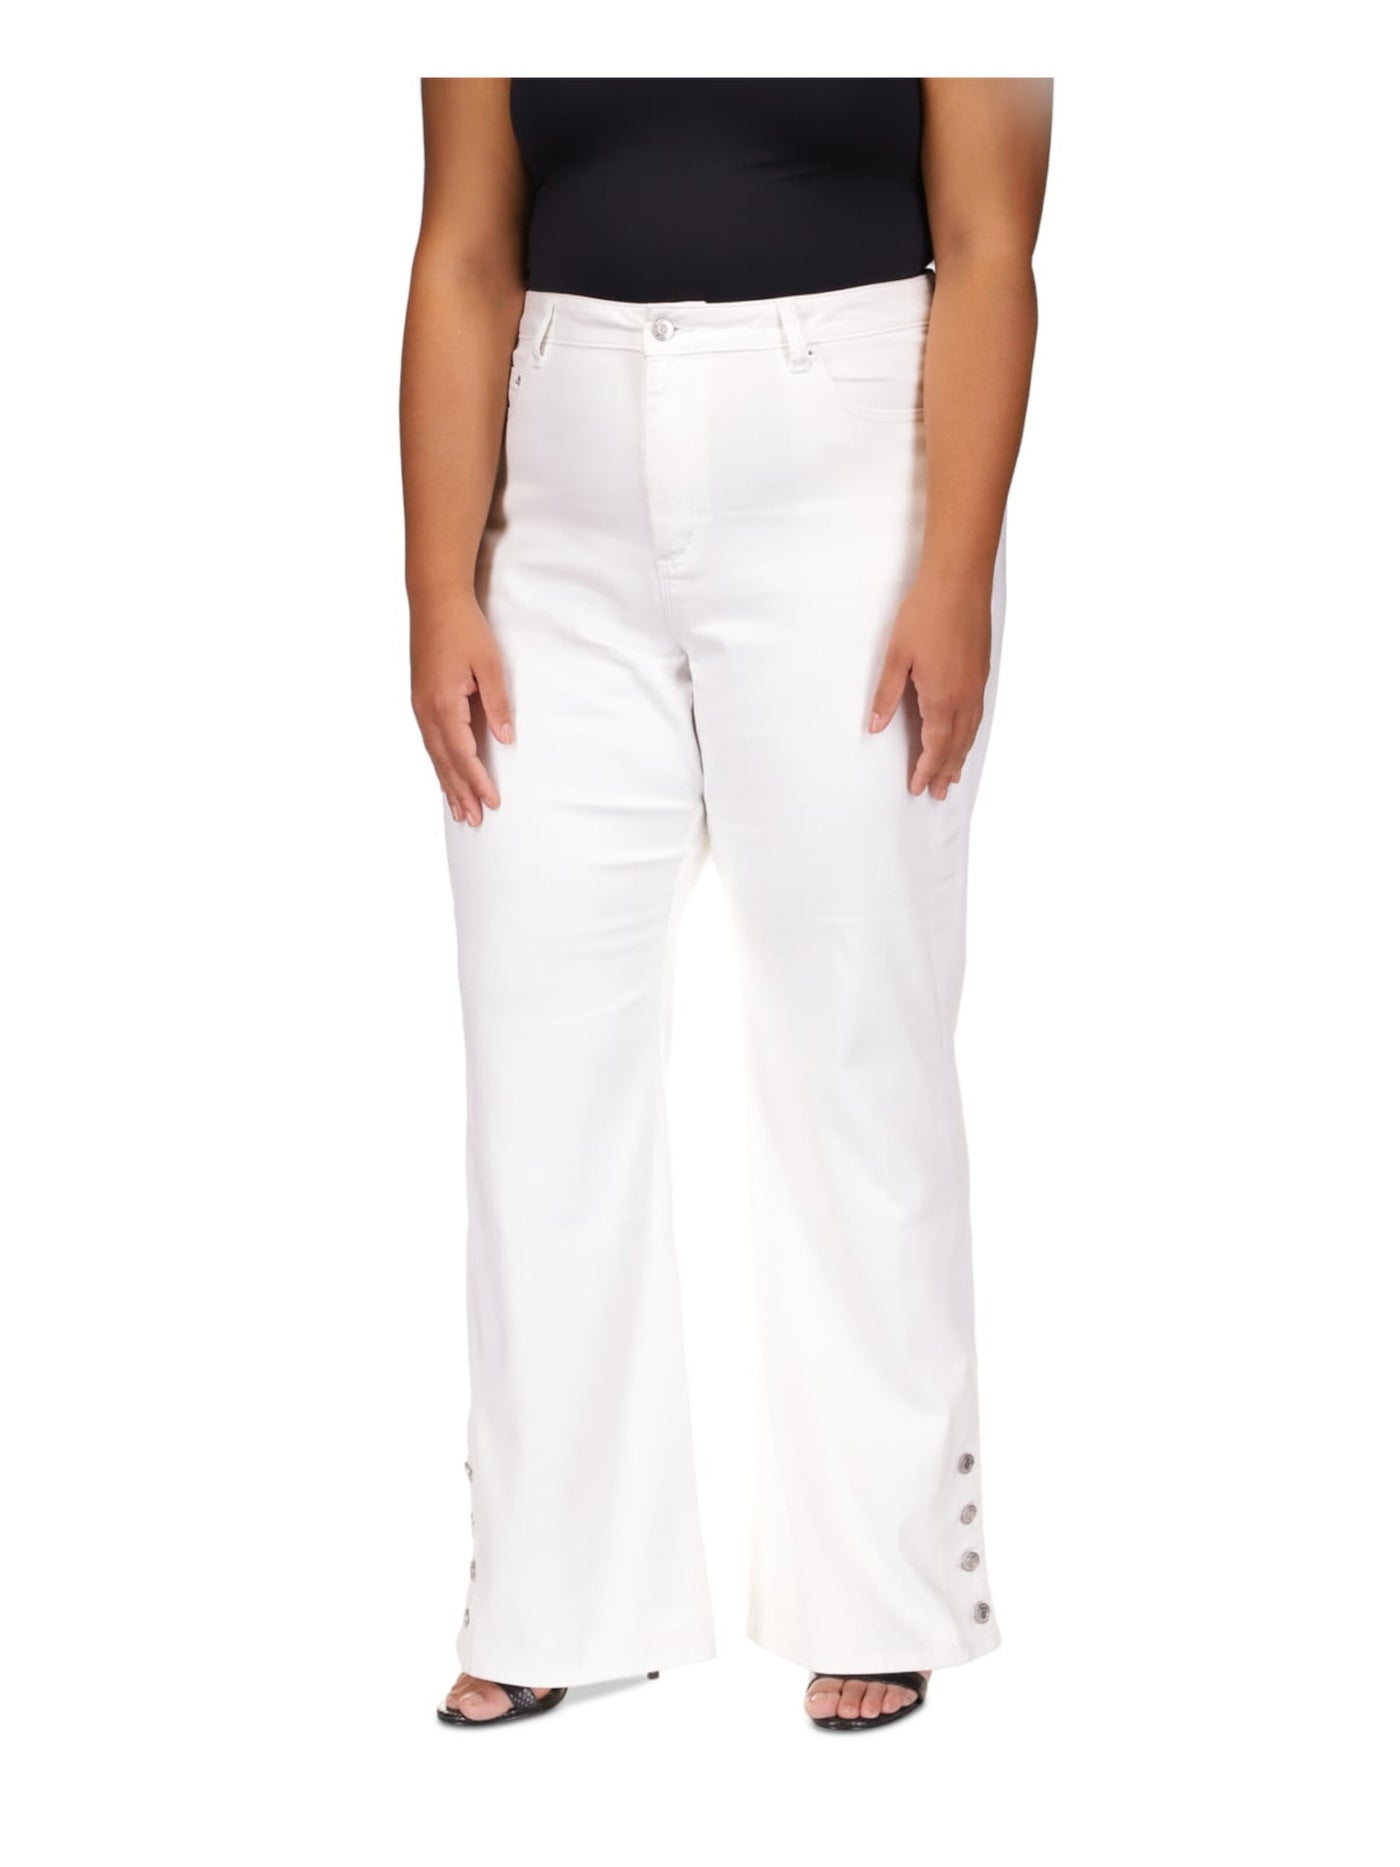 MICHAEL KORS Womens White Zippered Pocketed Button-hems High Waist Jeans Plus 16W